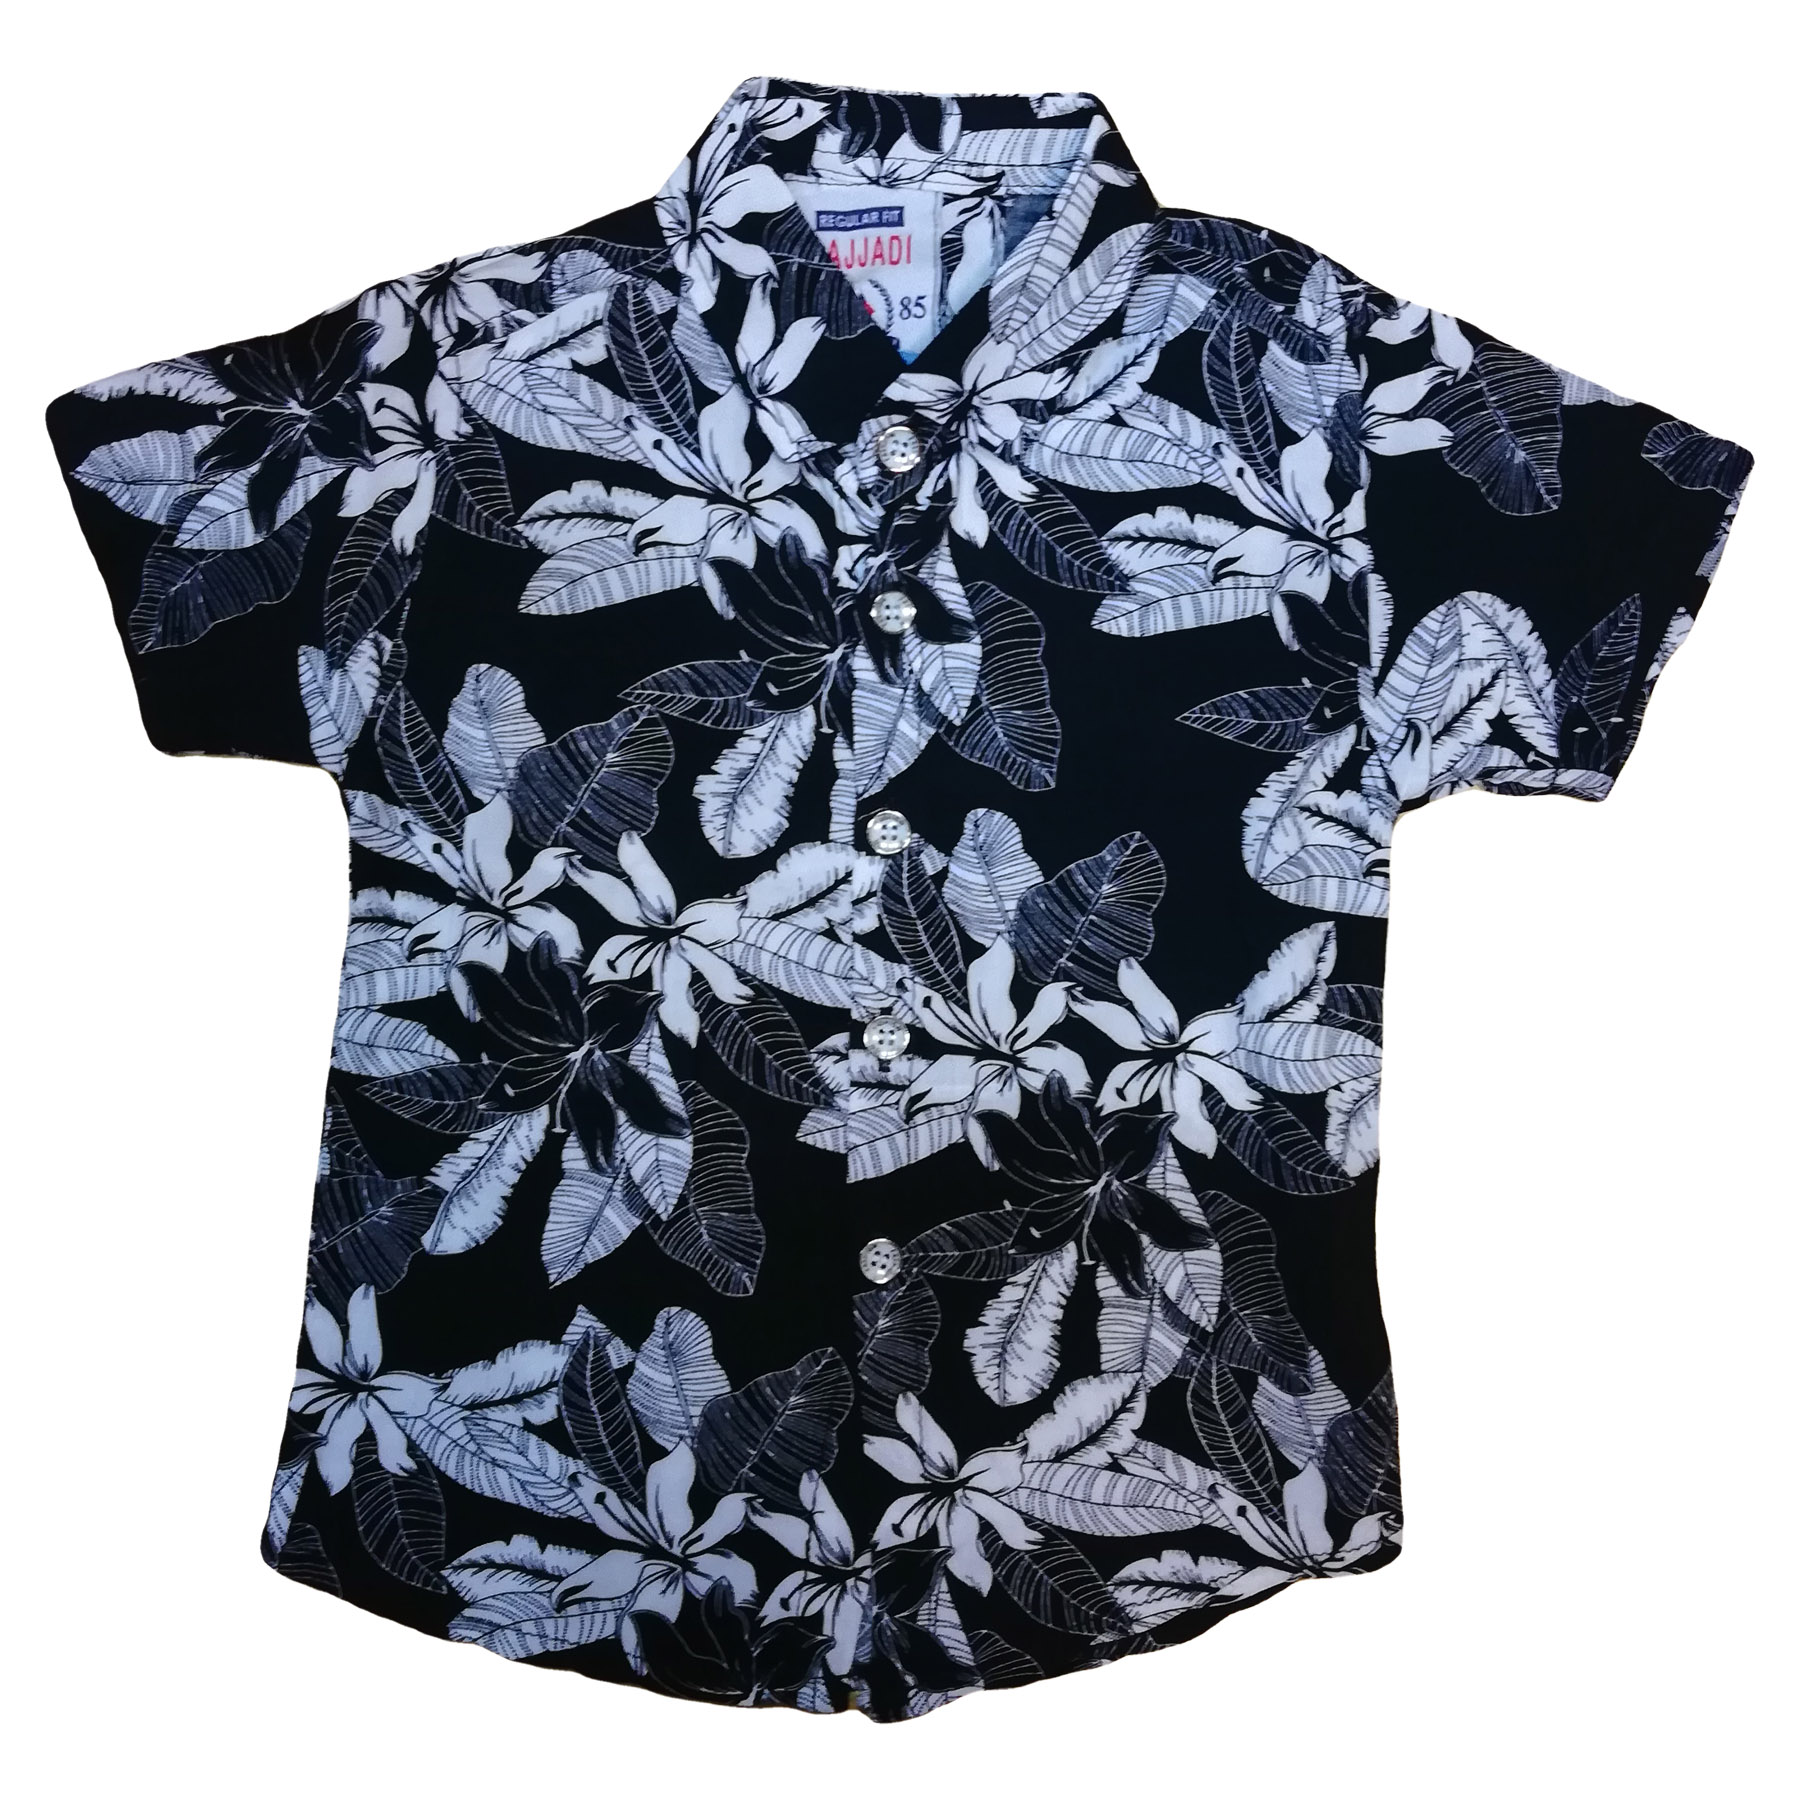 پیراهن پسرانه طرح هاوایی کد 00331028 رنگ مشکی